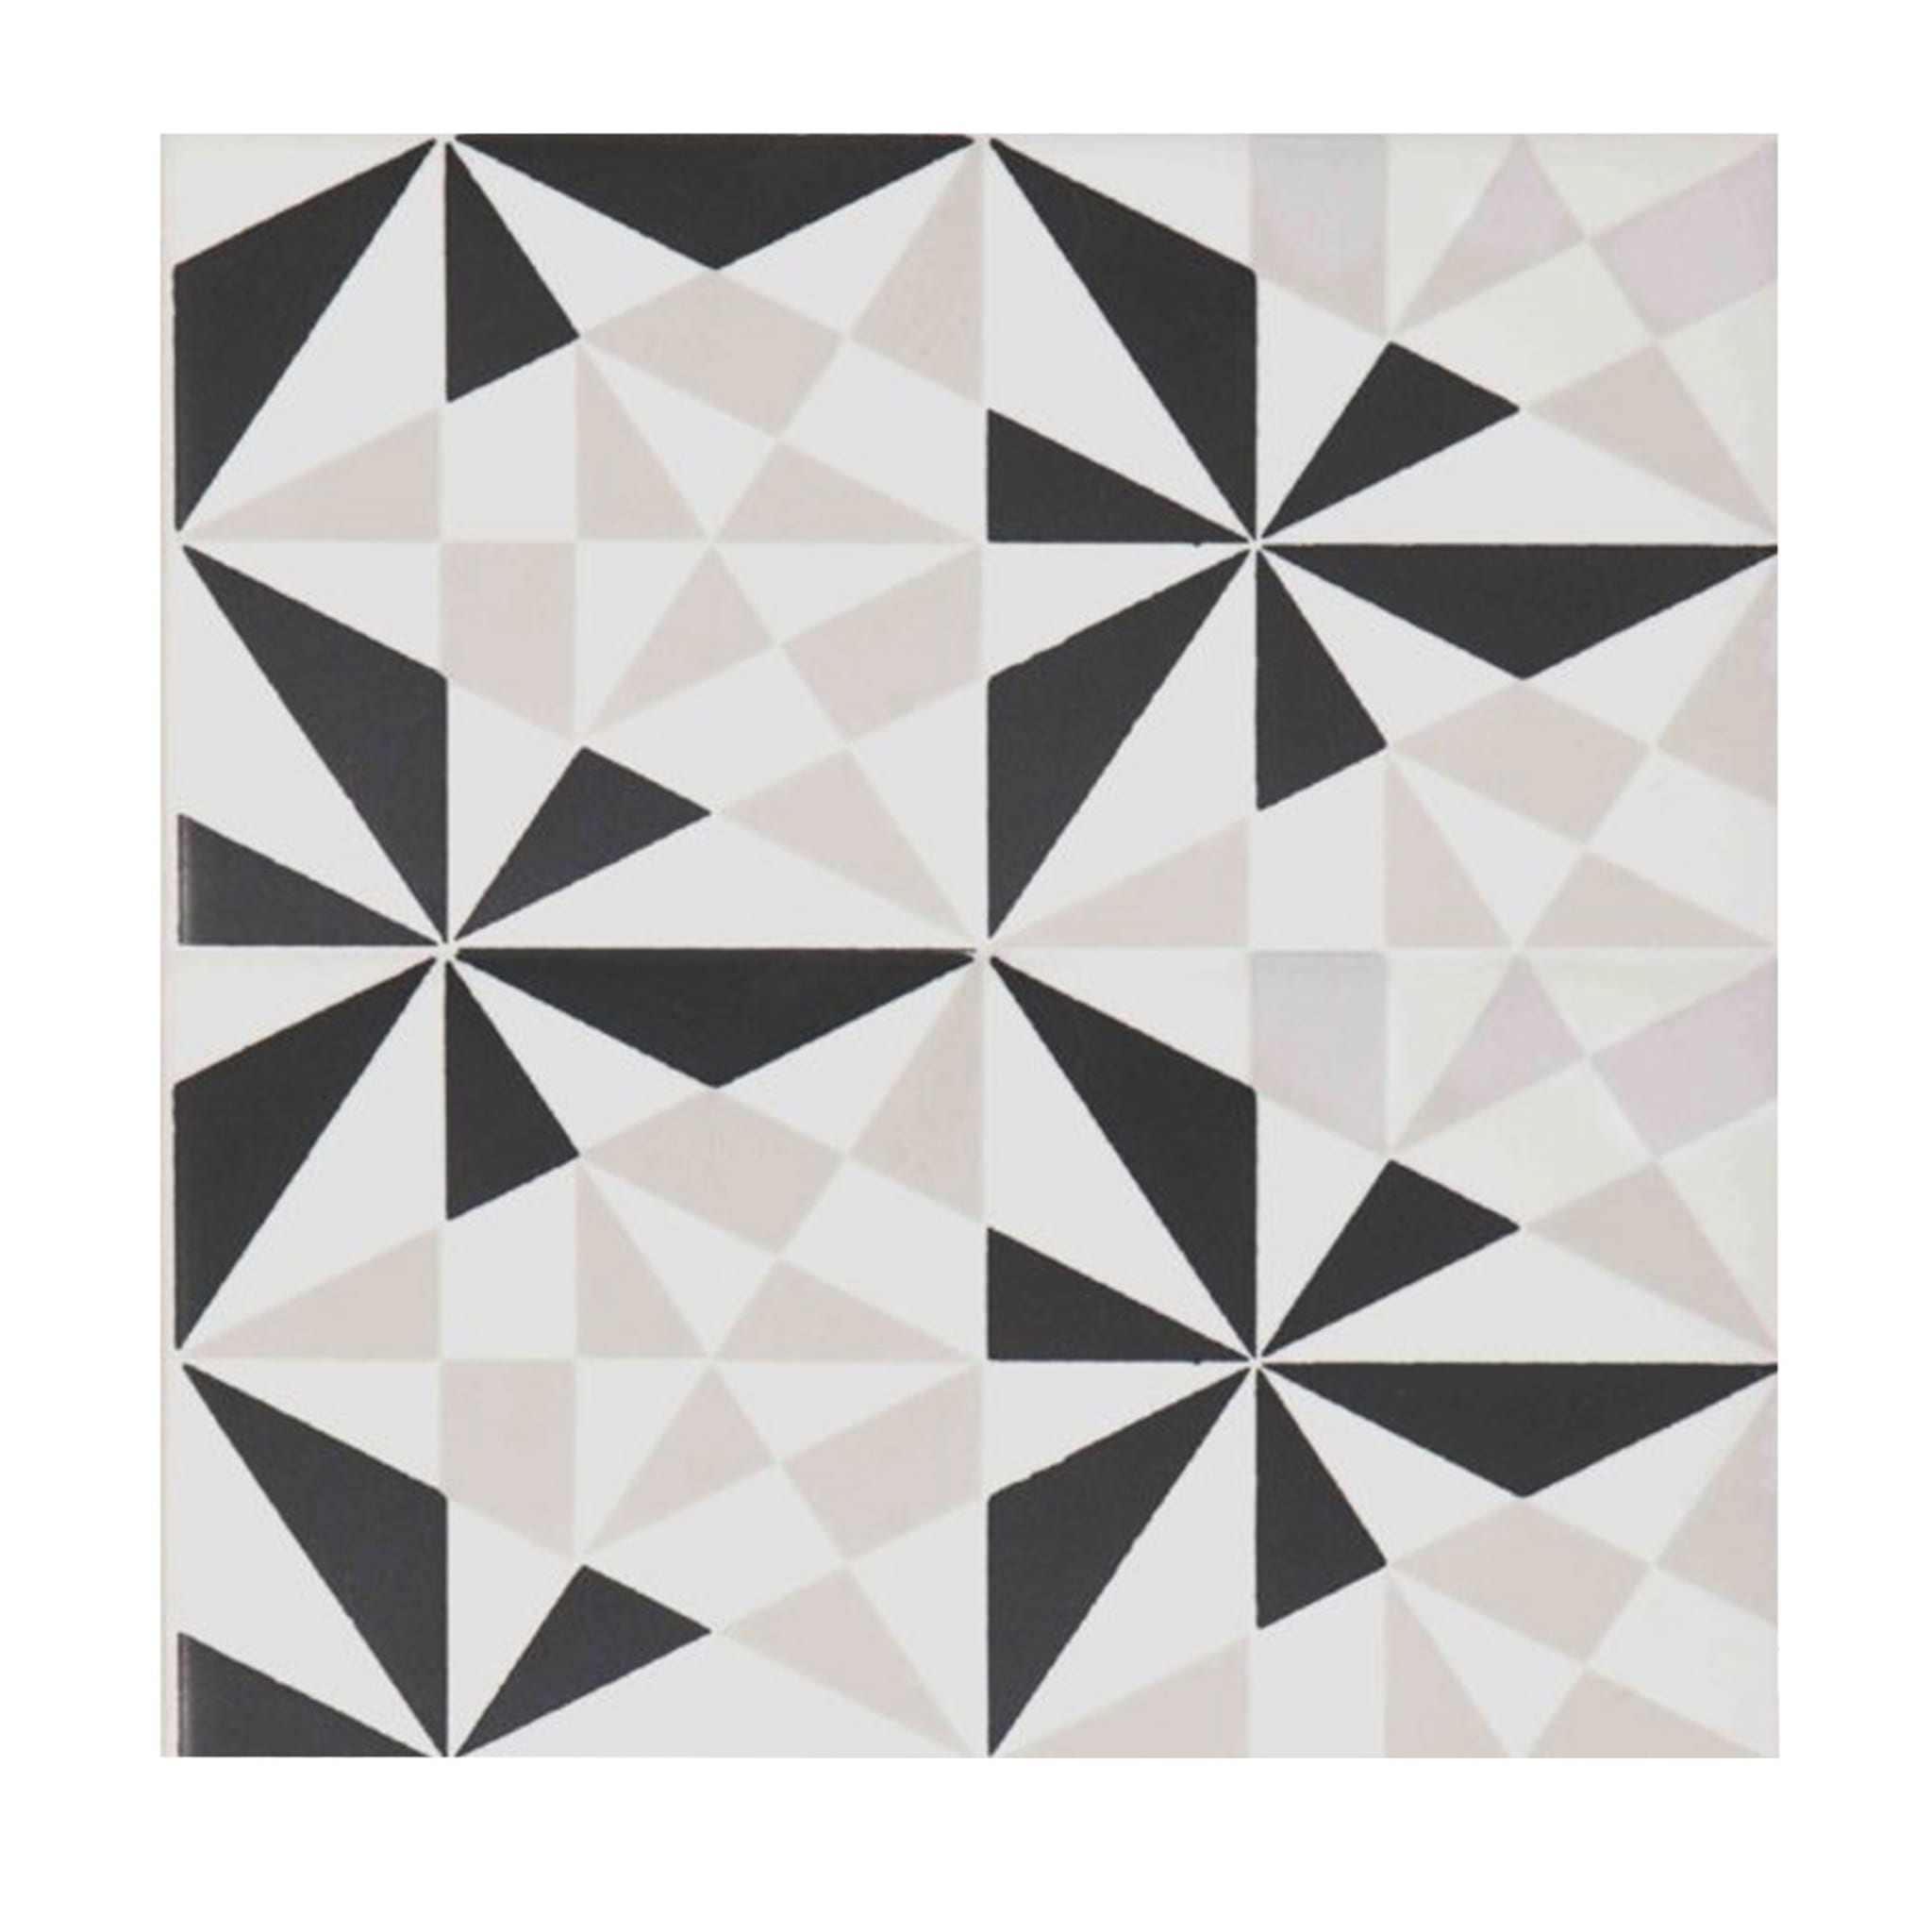 Set of 25 Geometric Trend C44 T1 Tiles - Main view